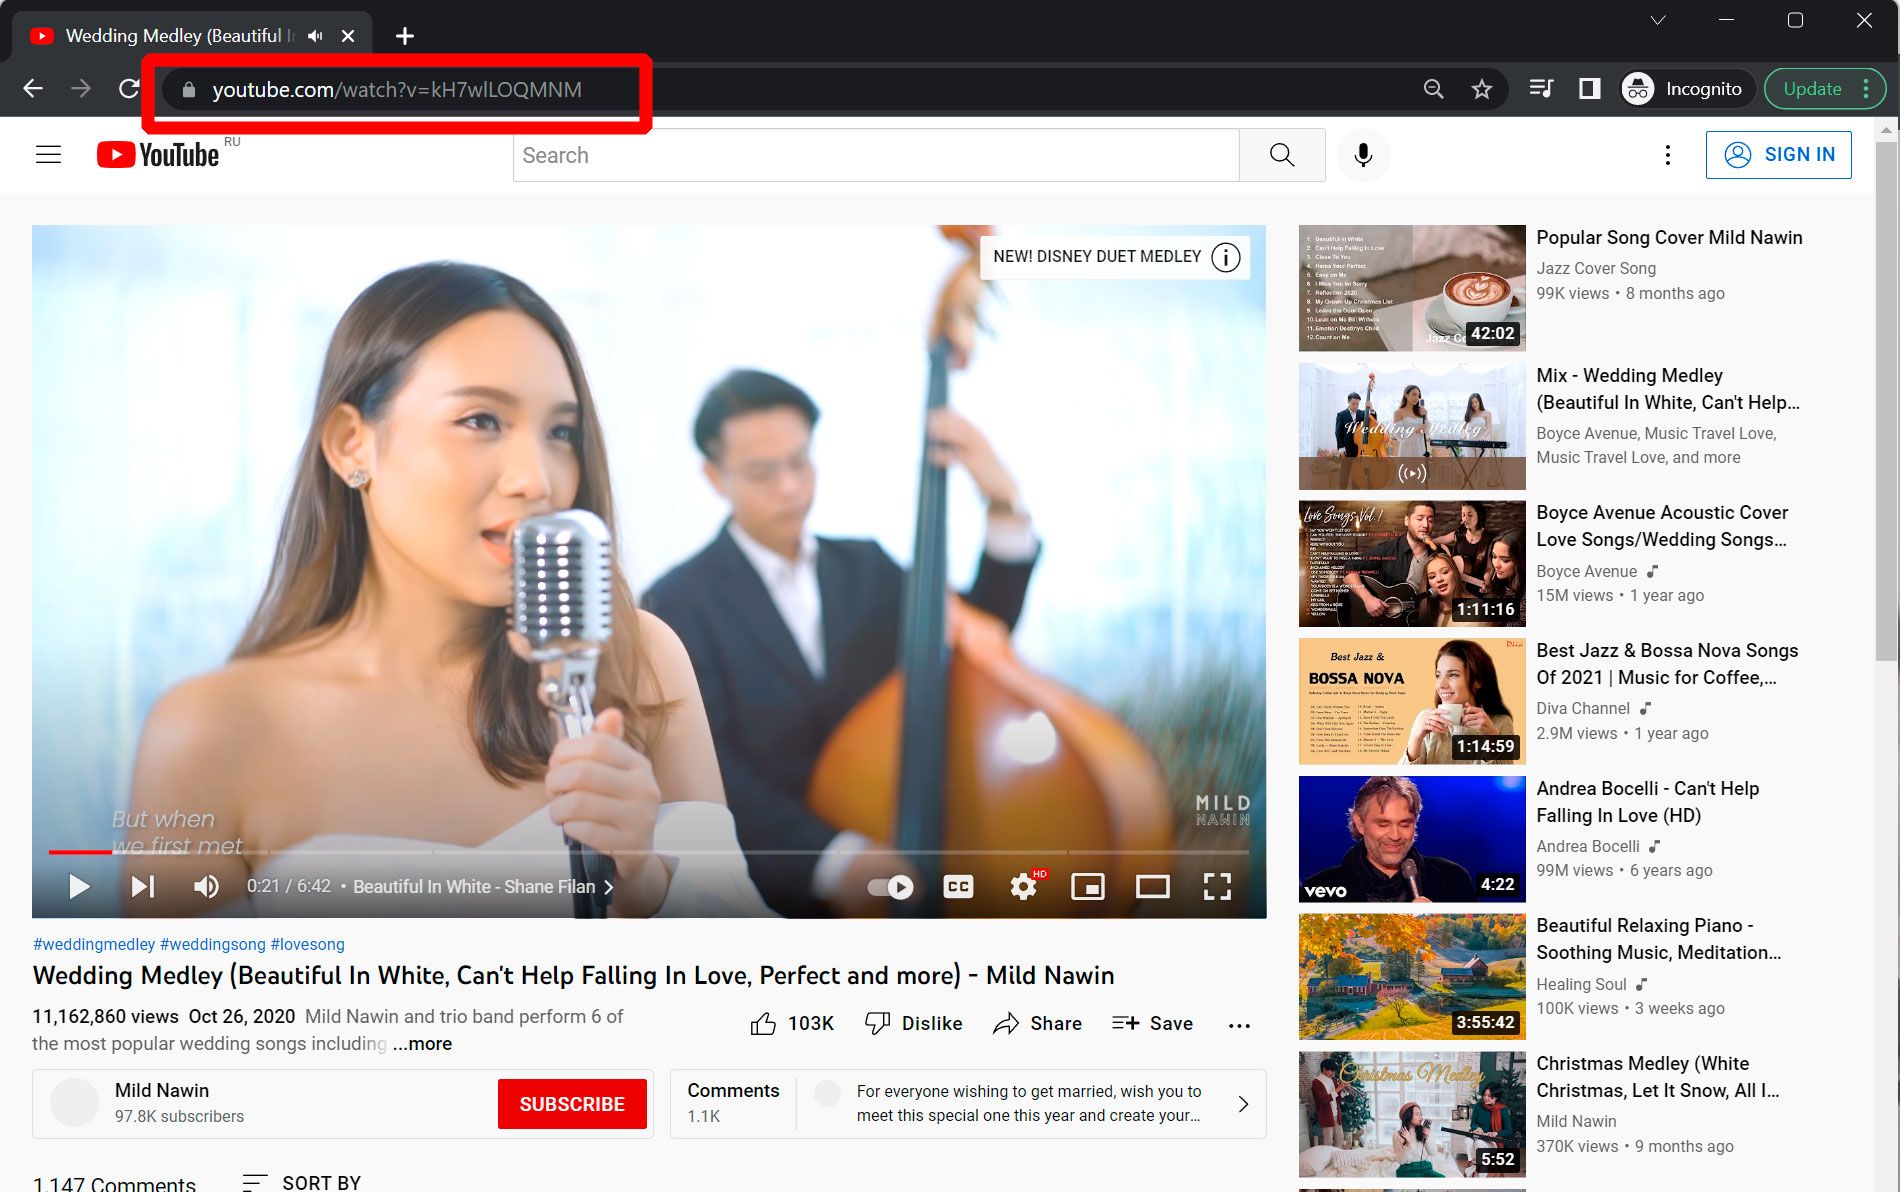 Cara mengunduh Video YouTube Langkah demi Langkah - Langkah 1.